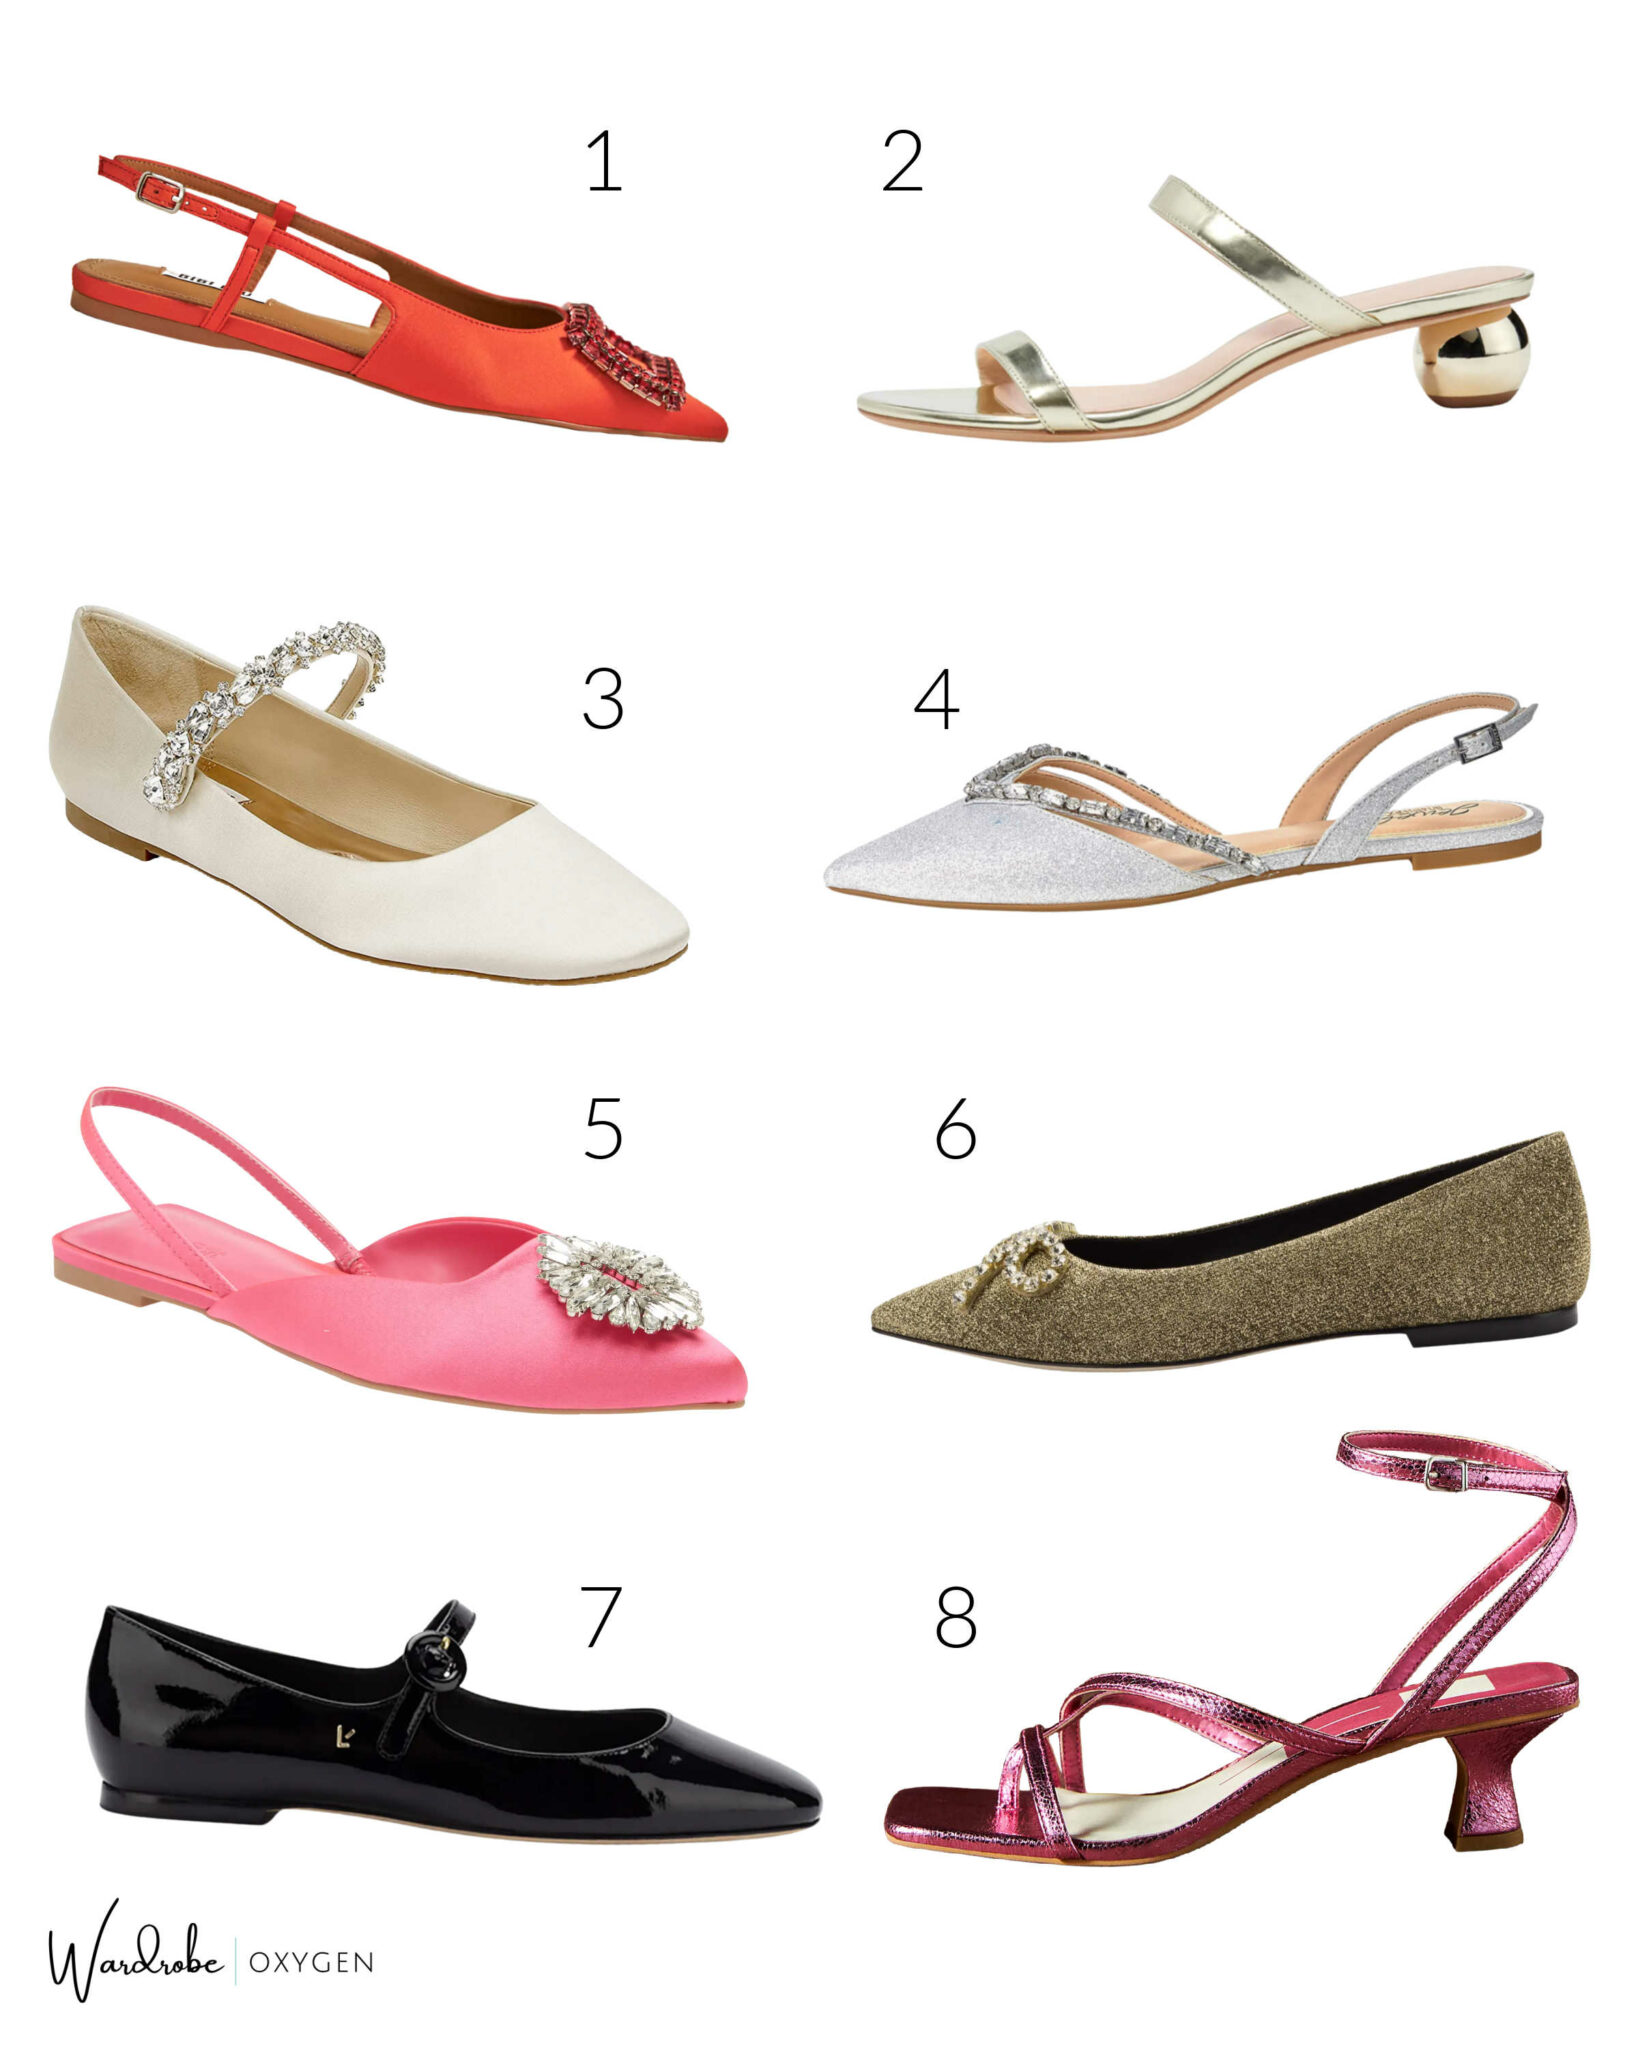 Dressy Flat Shoes: 40+ Chic Options | Wardrobe Oxygen